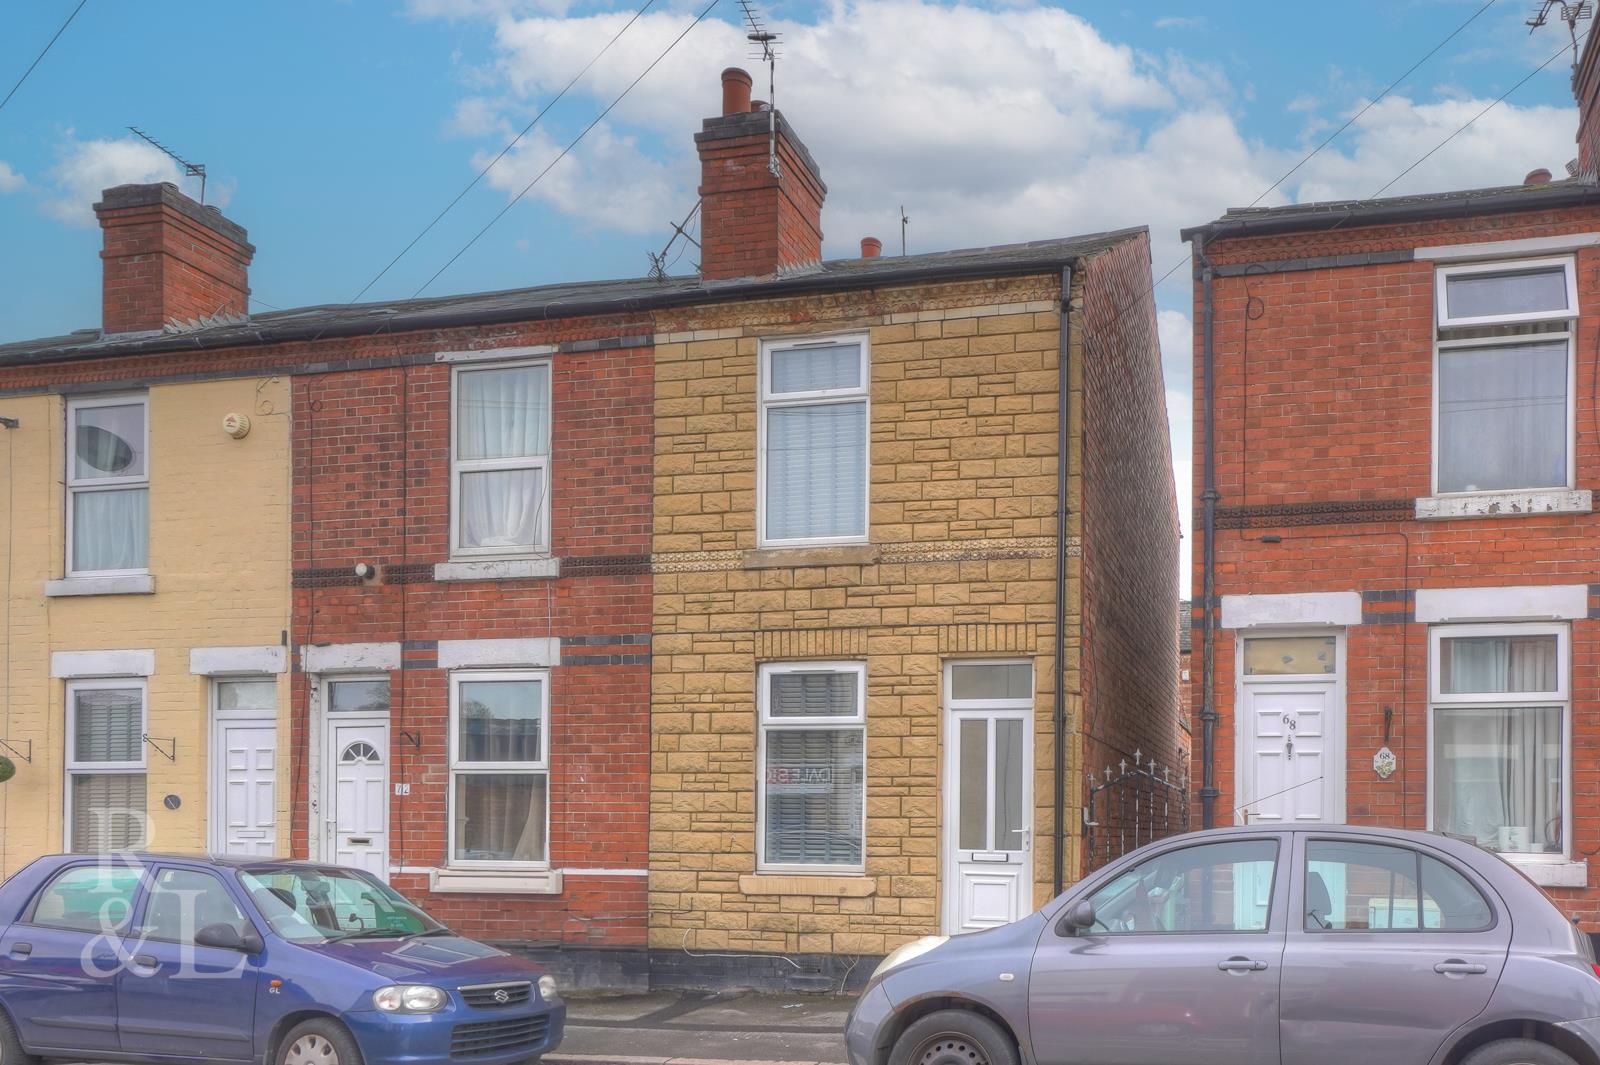 Property image for Lichfield Road, Sneinton, Nottingham